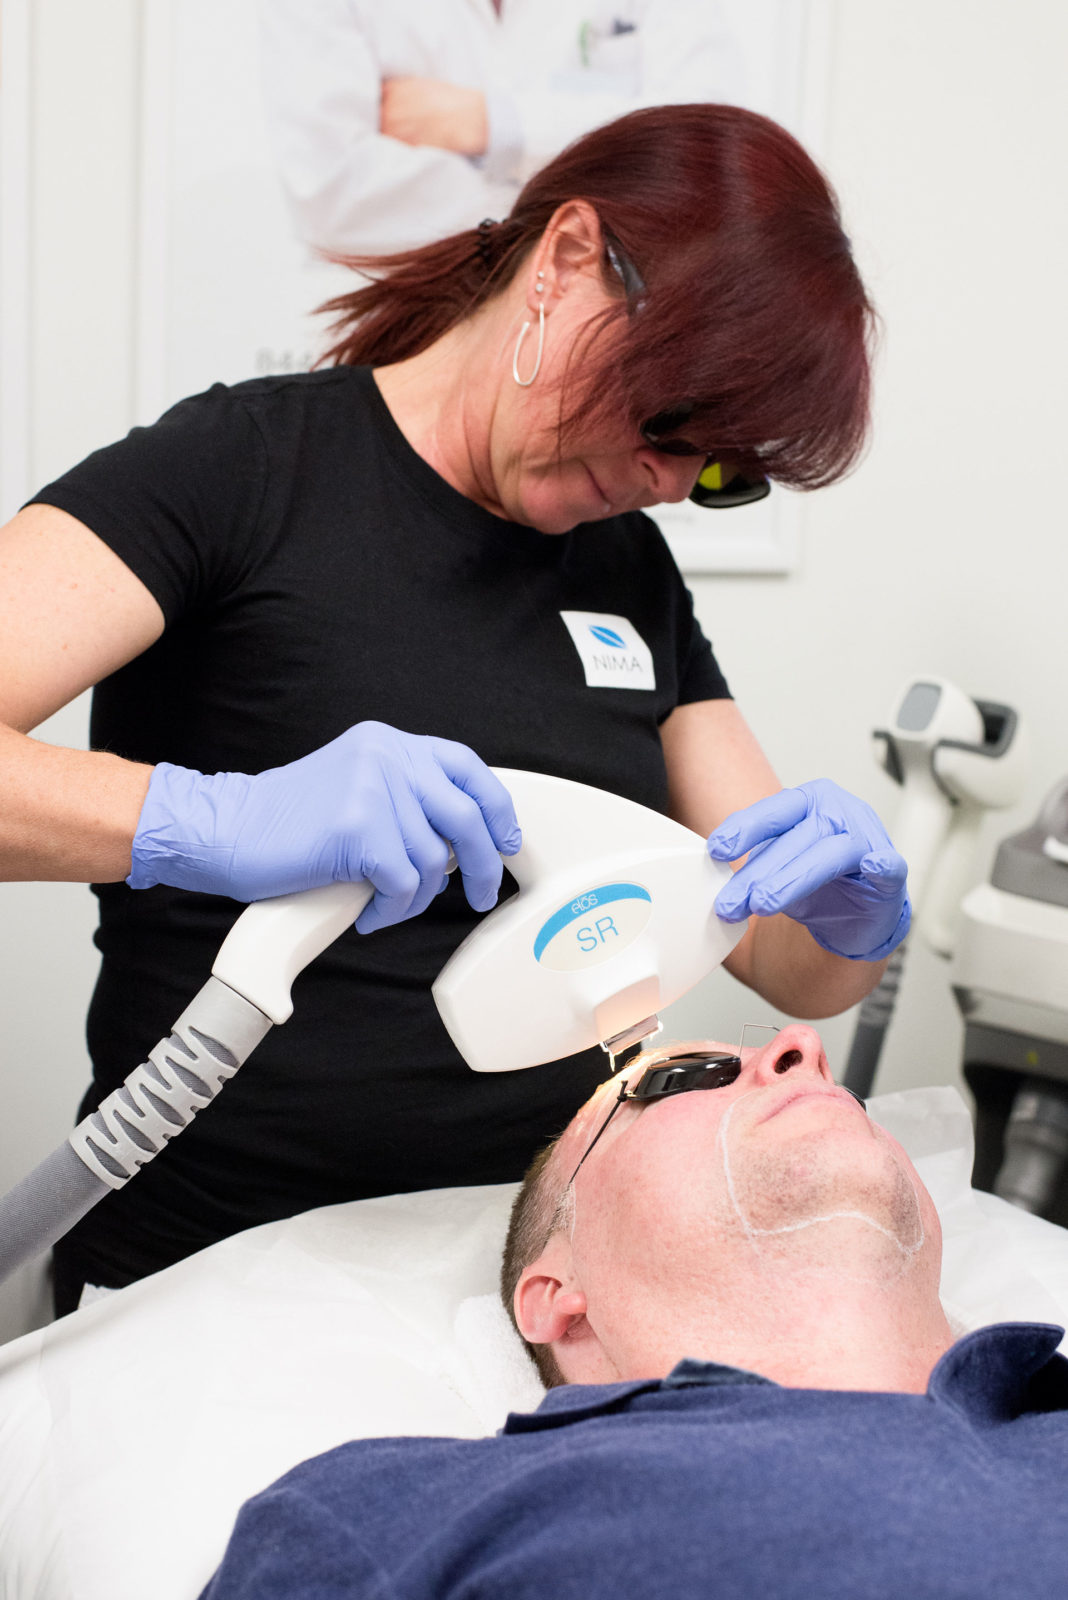 Laser Aesthetics Training & Laser Hair Removal Courses | NIMA